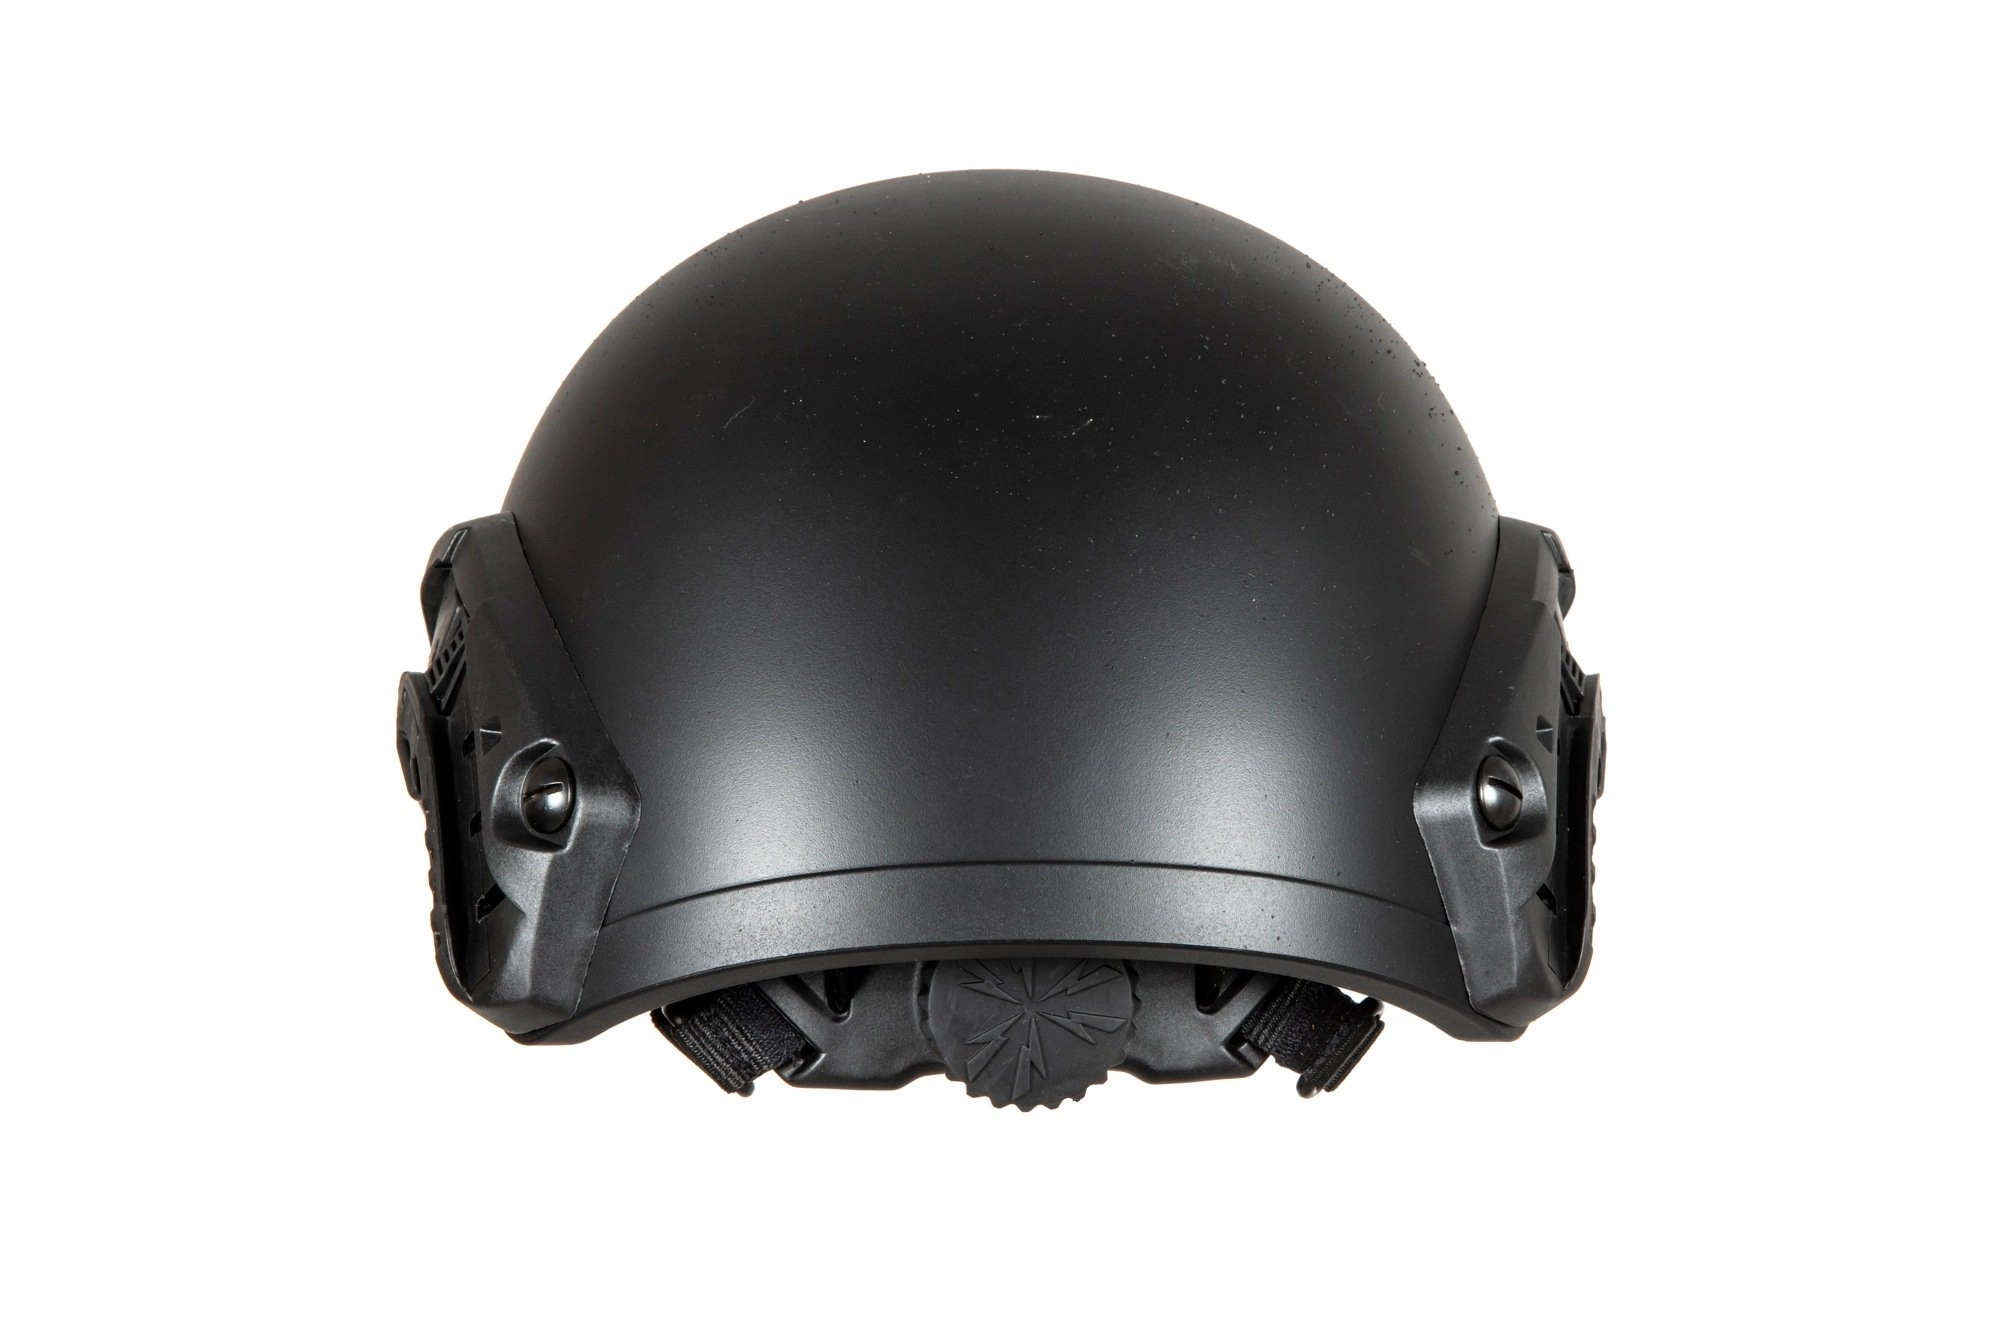 Aramid Ballistic Helmet Replica Heavy Version – Black